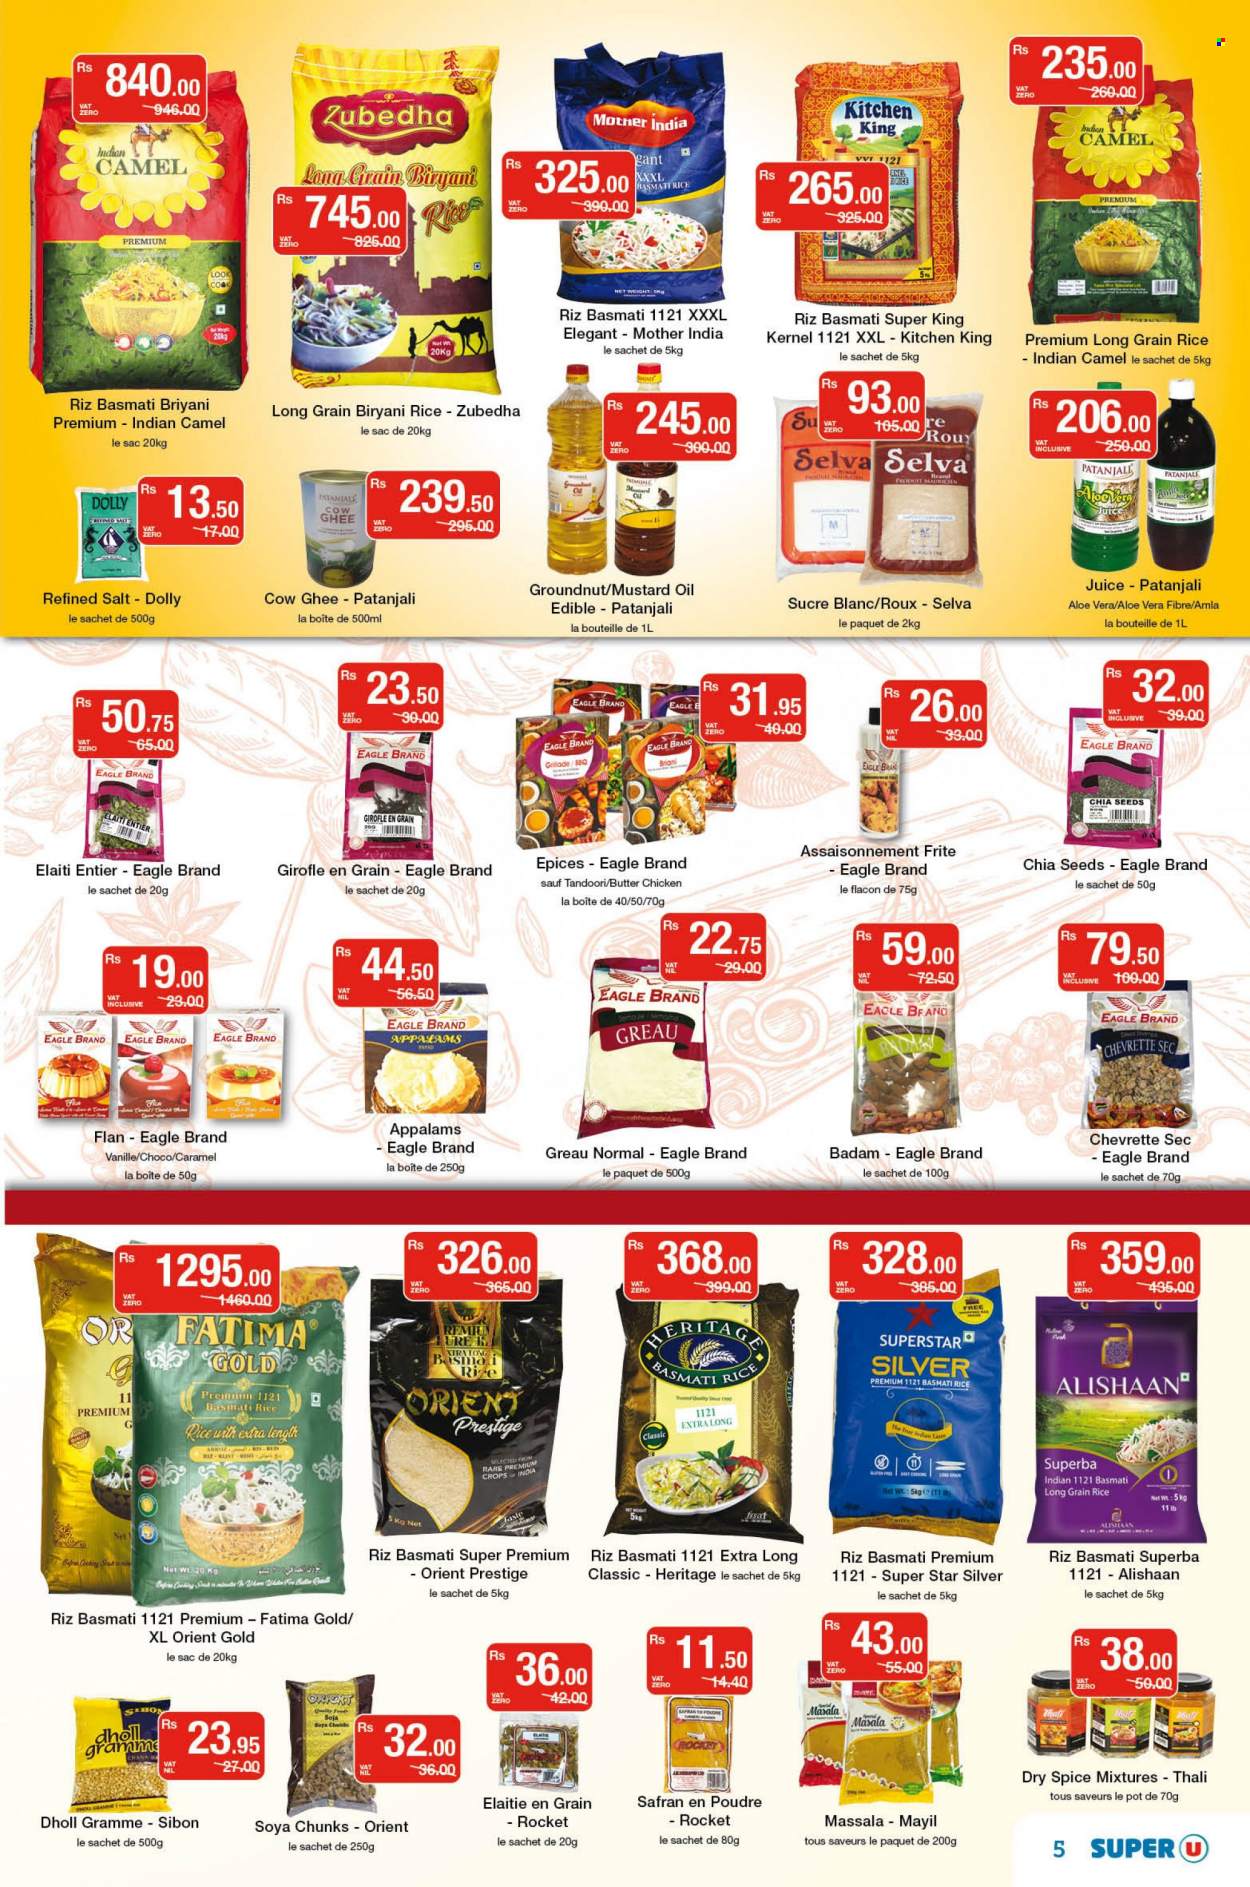 Super U Catalogue - 10.05.2022 - 22.05.2022 - Sales products - rocket, ghee, basmati rice, rice, soya chunks, long grain rice, chia seeds, spice, caramel, mustard oil, oil, Camel, juice, pot. Page 5.